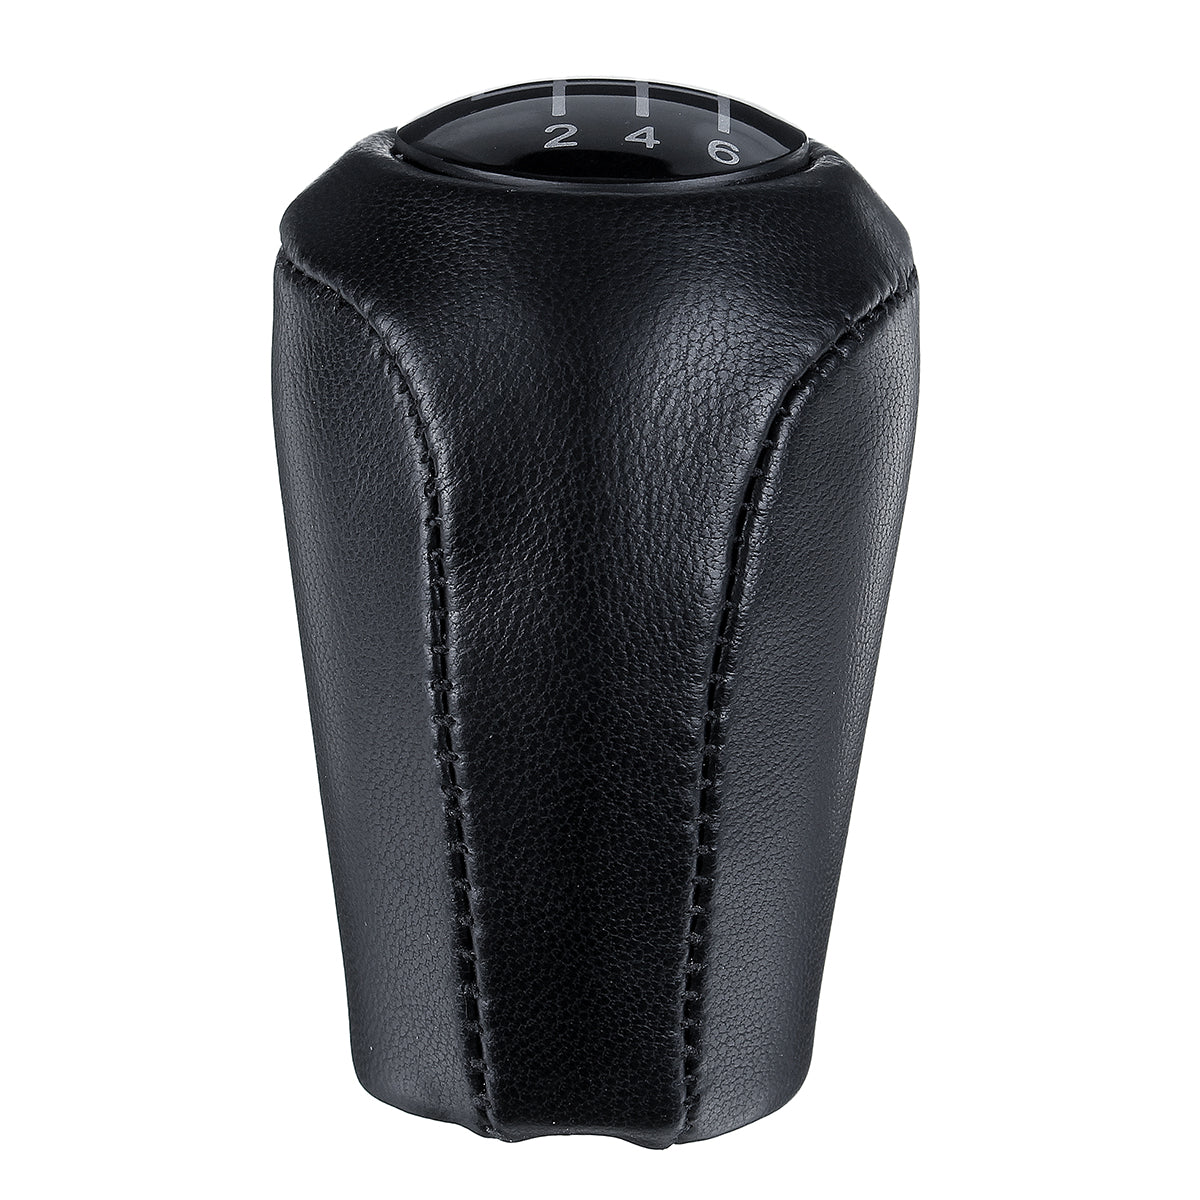 Black 5/6 Speed Leather Gear Shift Knob Stick For Mazda 3 5 6 CX-7 MX-5